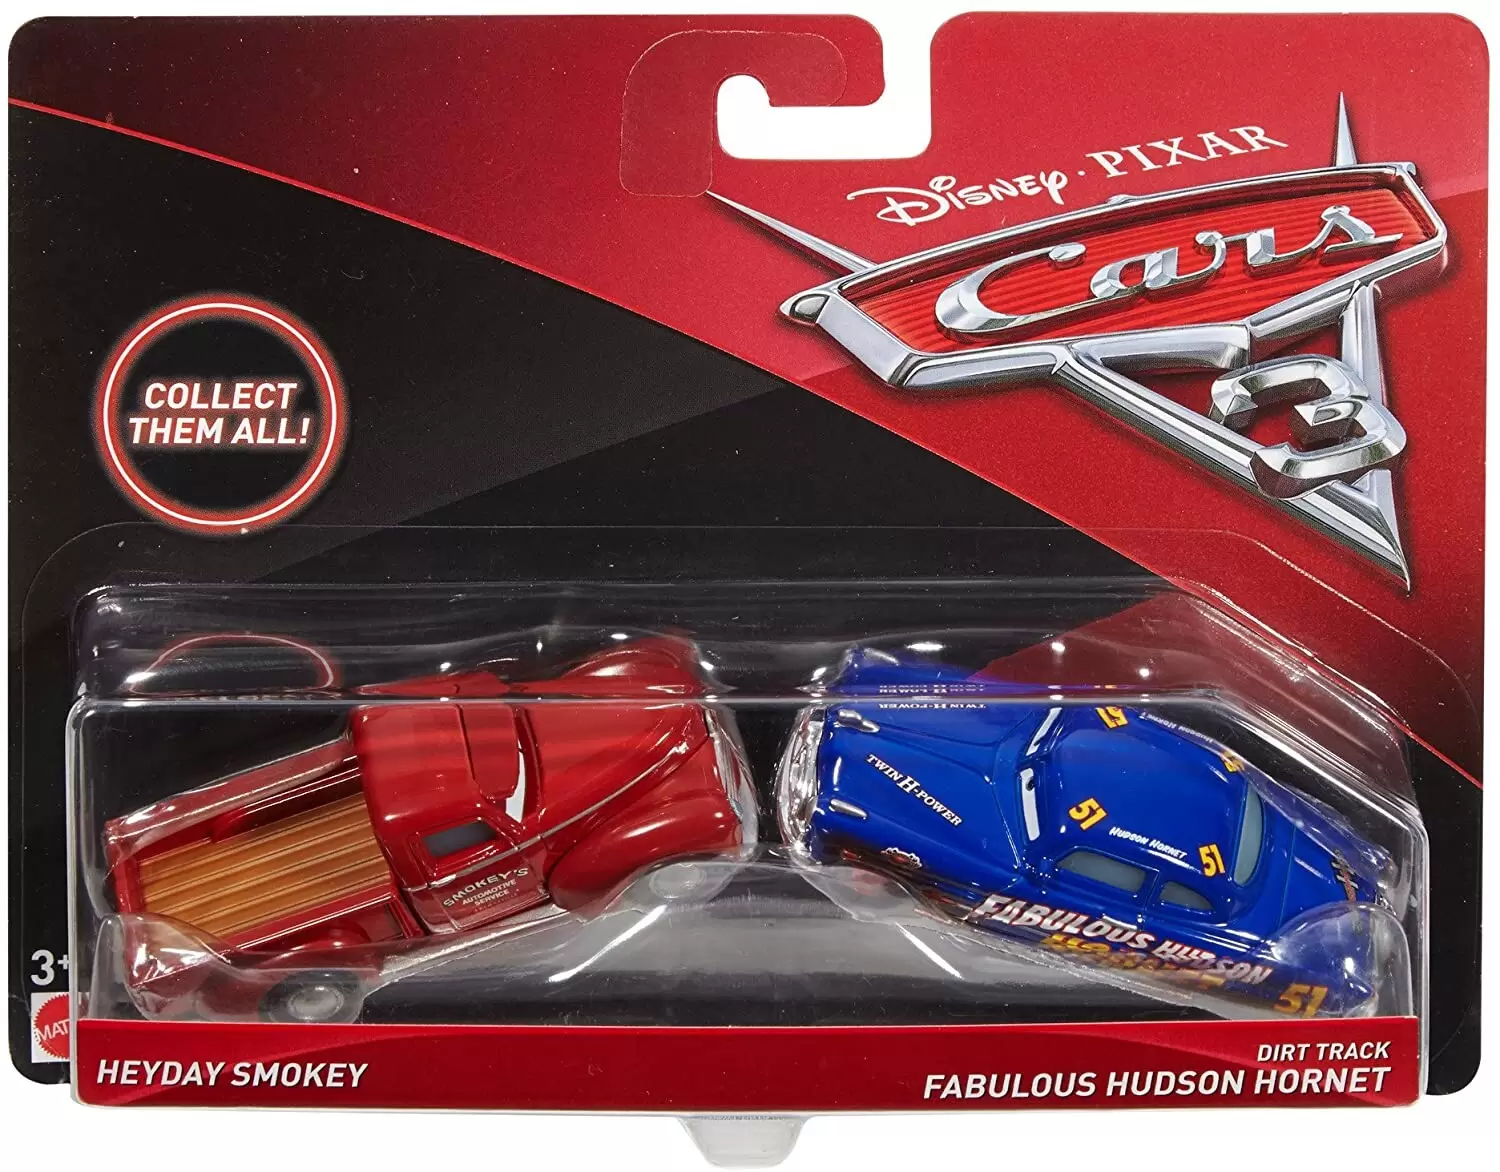 Cars 3 models - Heyday Smokey & Dirt Track Fabulous Hudson Hornet